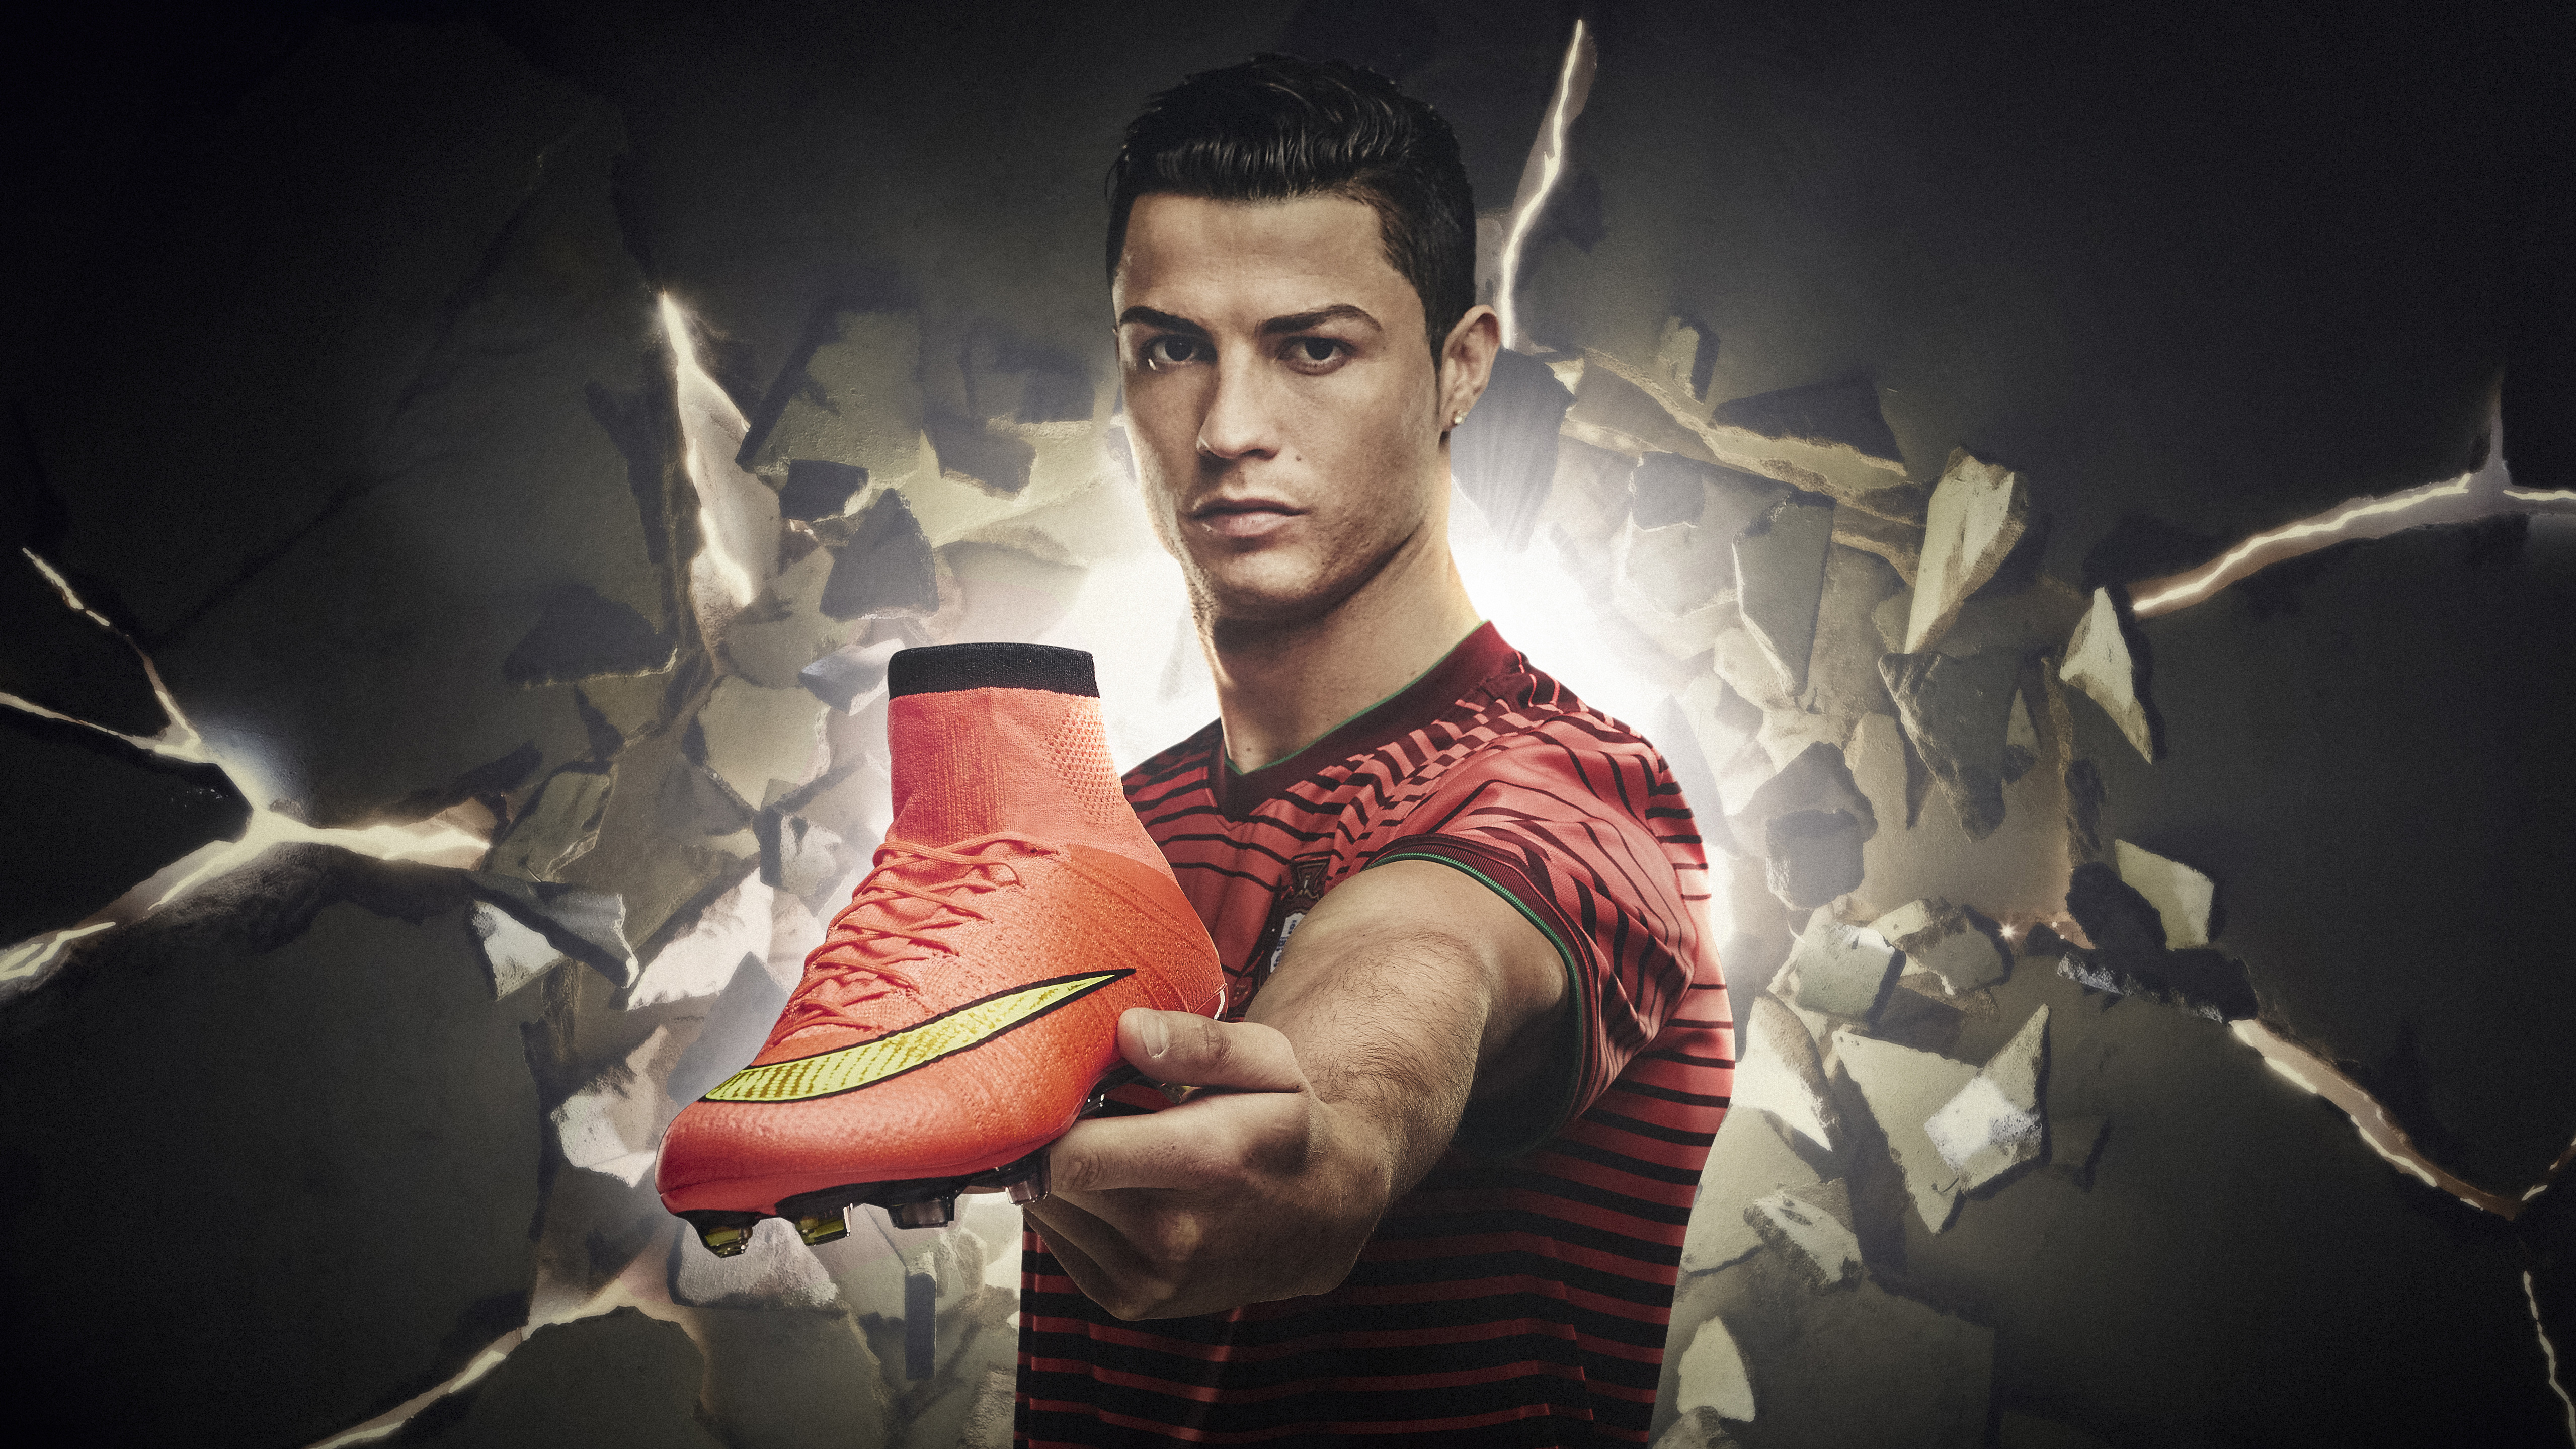 Cristiano Ronaldo Nike Mercurial Football Boots731426031 - Cristiano Ronaldo Nike Mercurial Football Boots - Ronaldo, Nike, Mercurial, Football, Cristiano, Boots